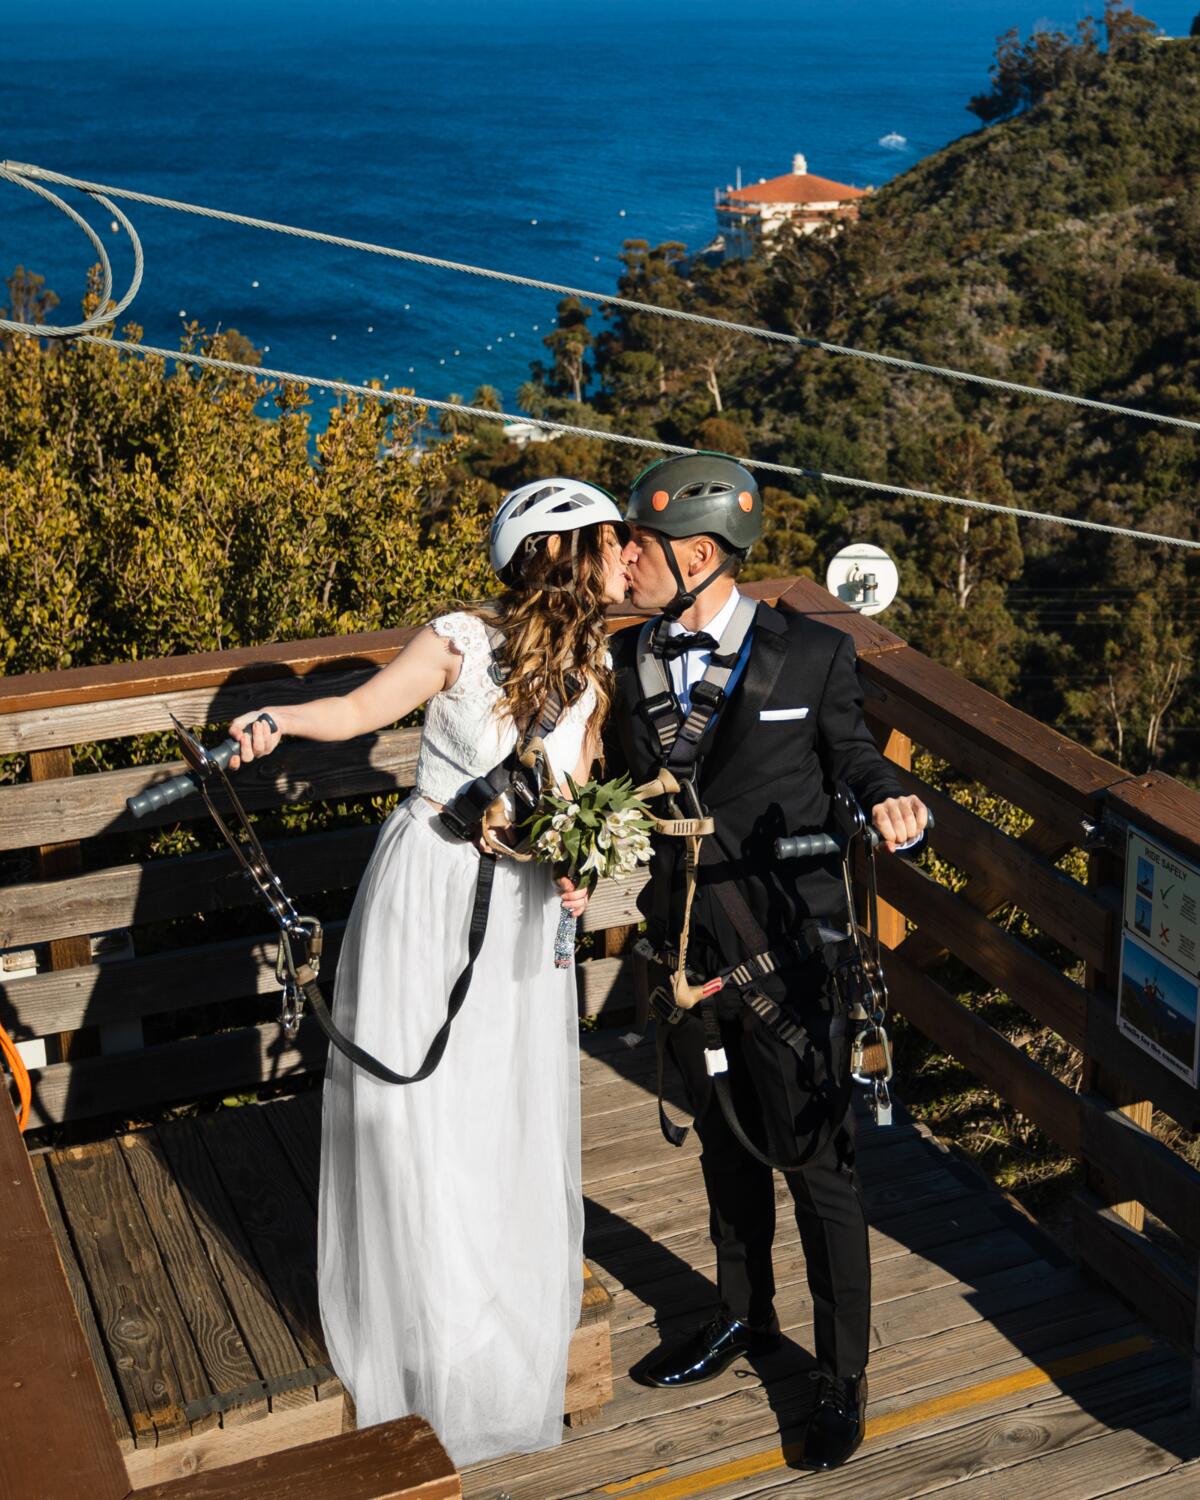 Bride and groom kissing on a zipline platform on Catalina Island.